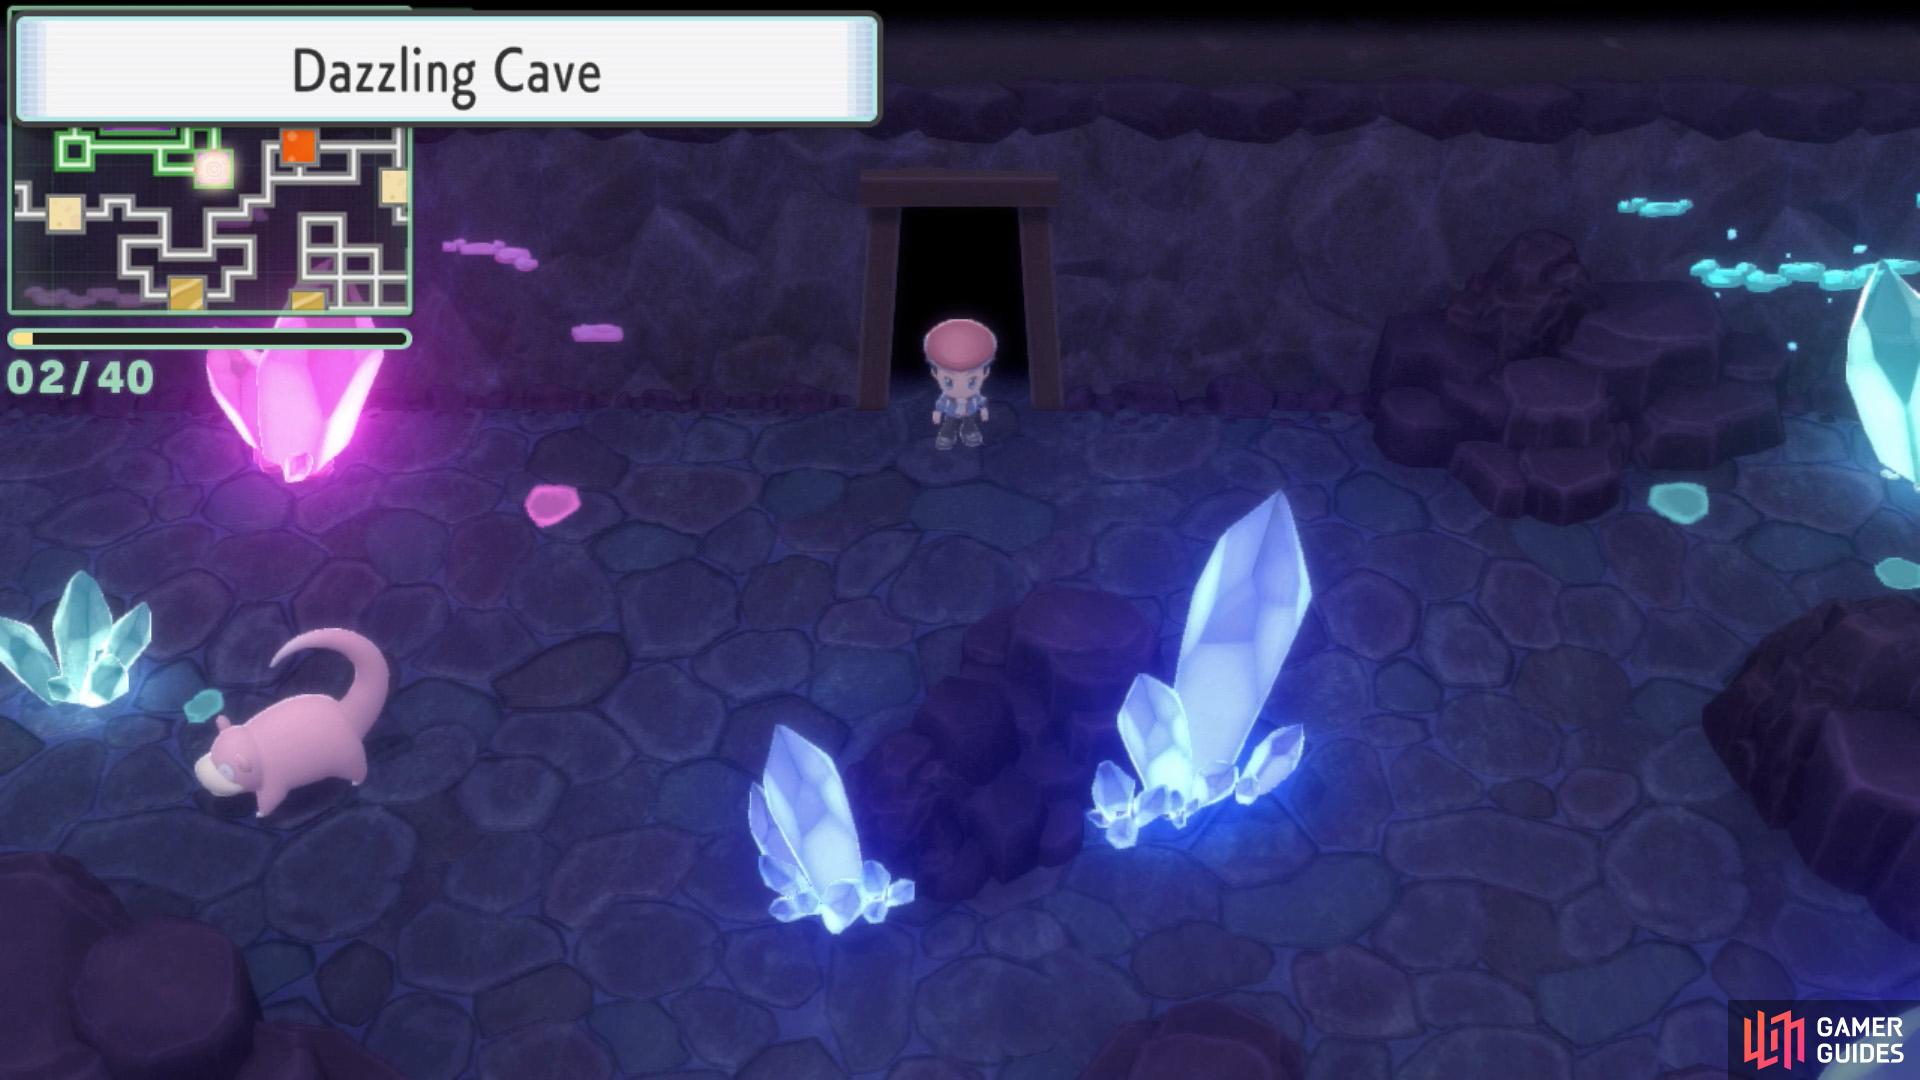 Dazzling Caves are quite rare in the Grand Underground.